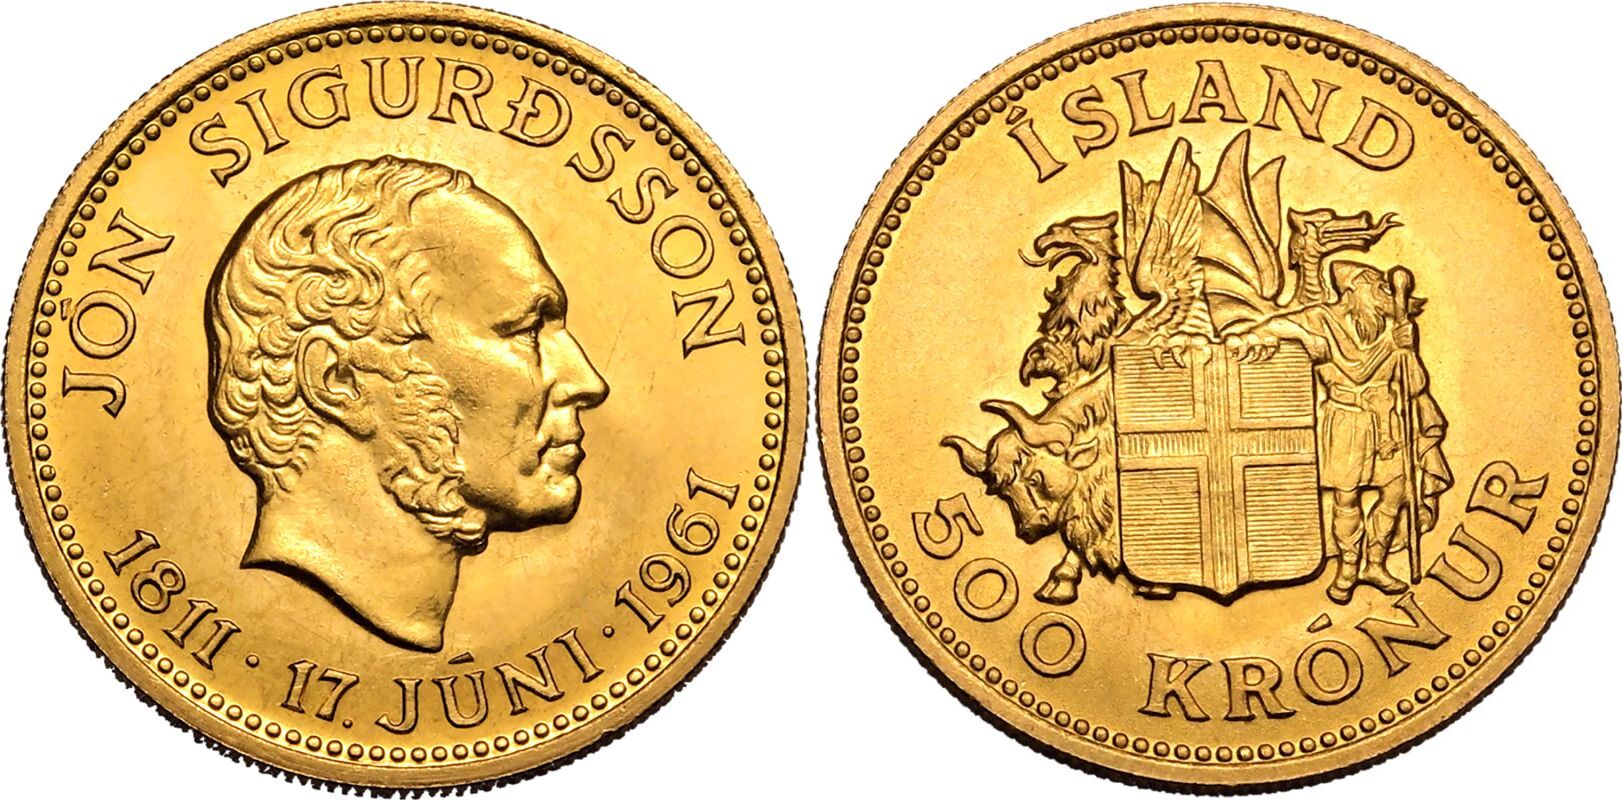 Iceland Republic 1961 Gold 500 Kronur